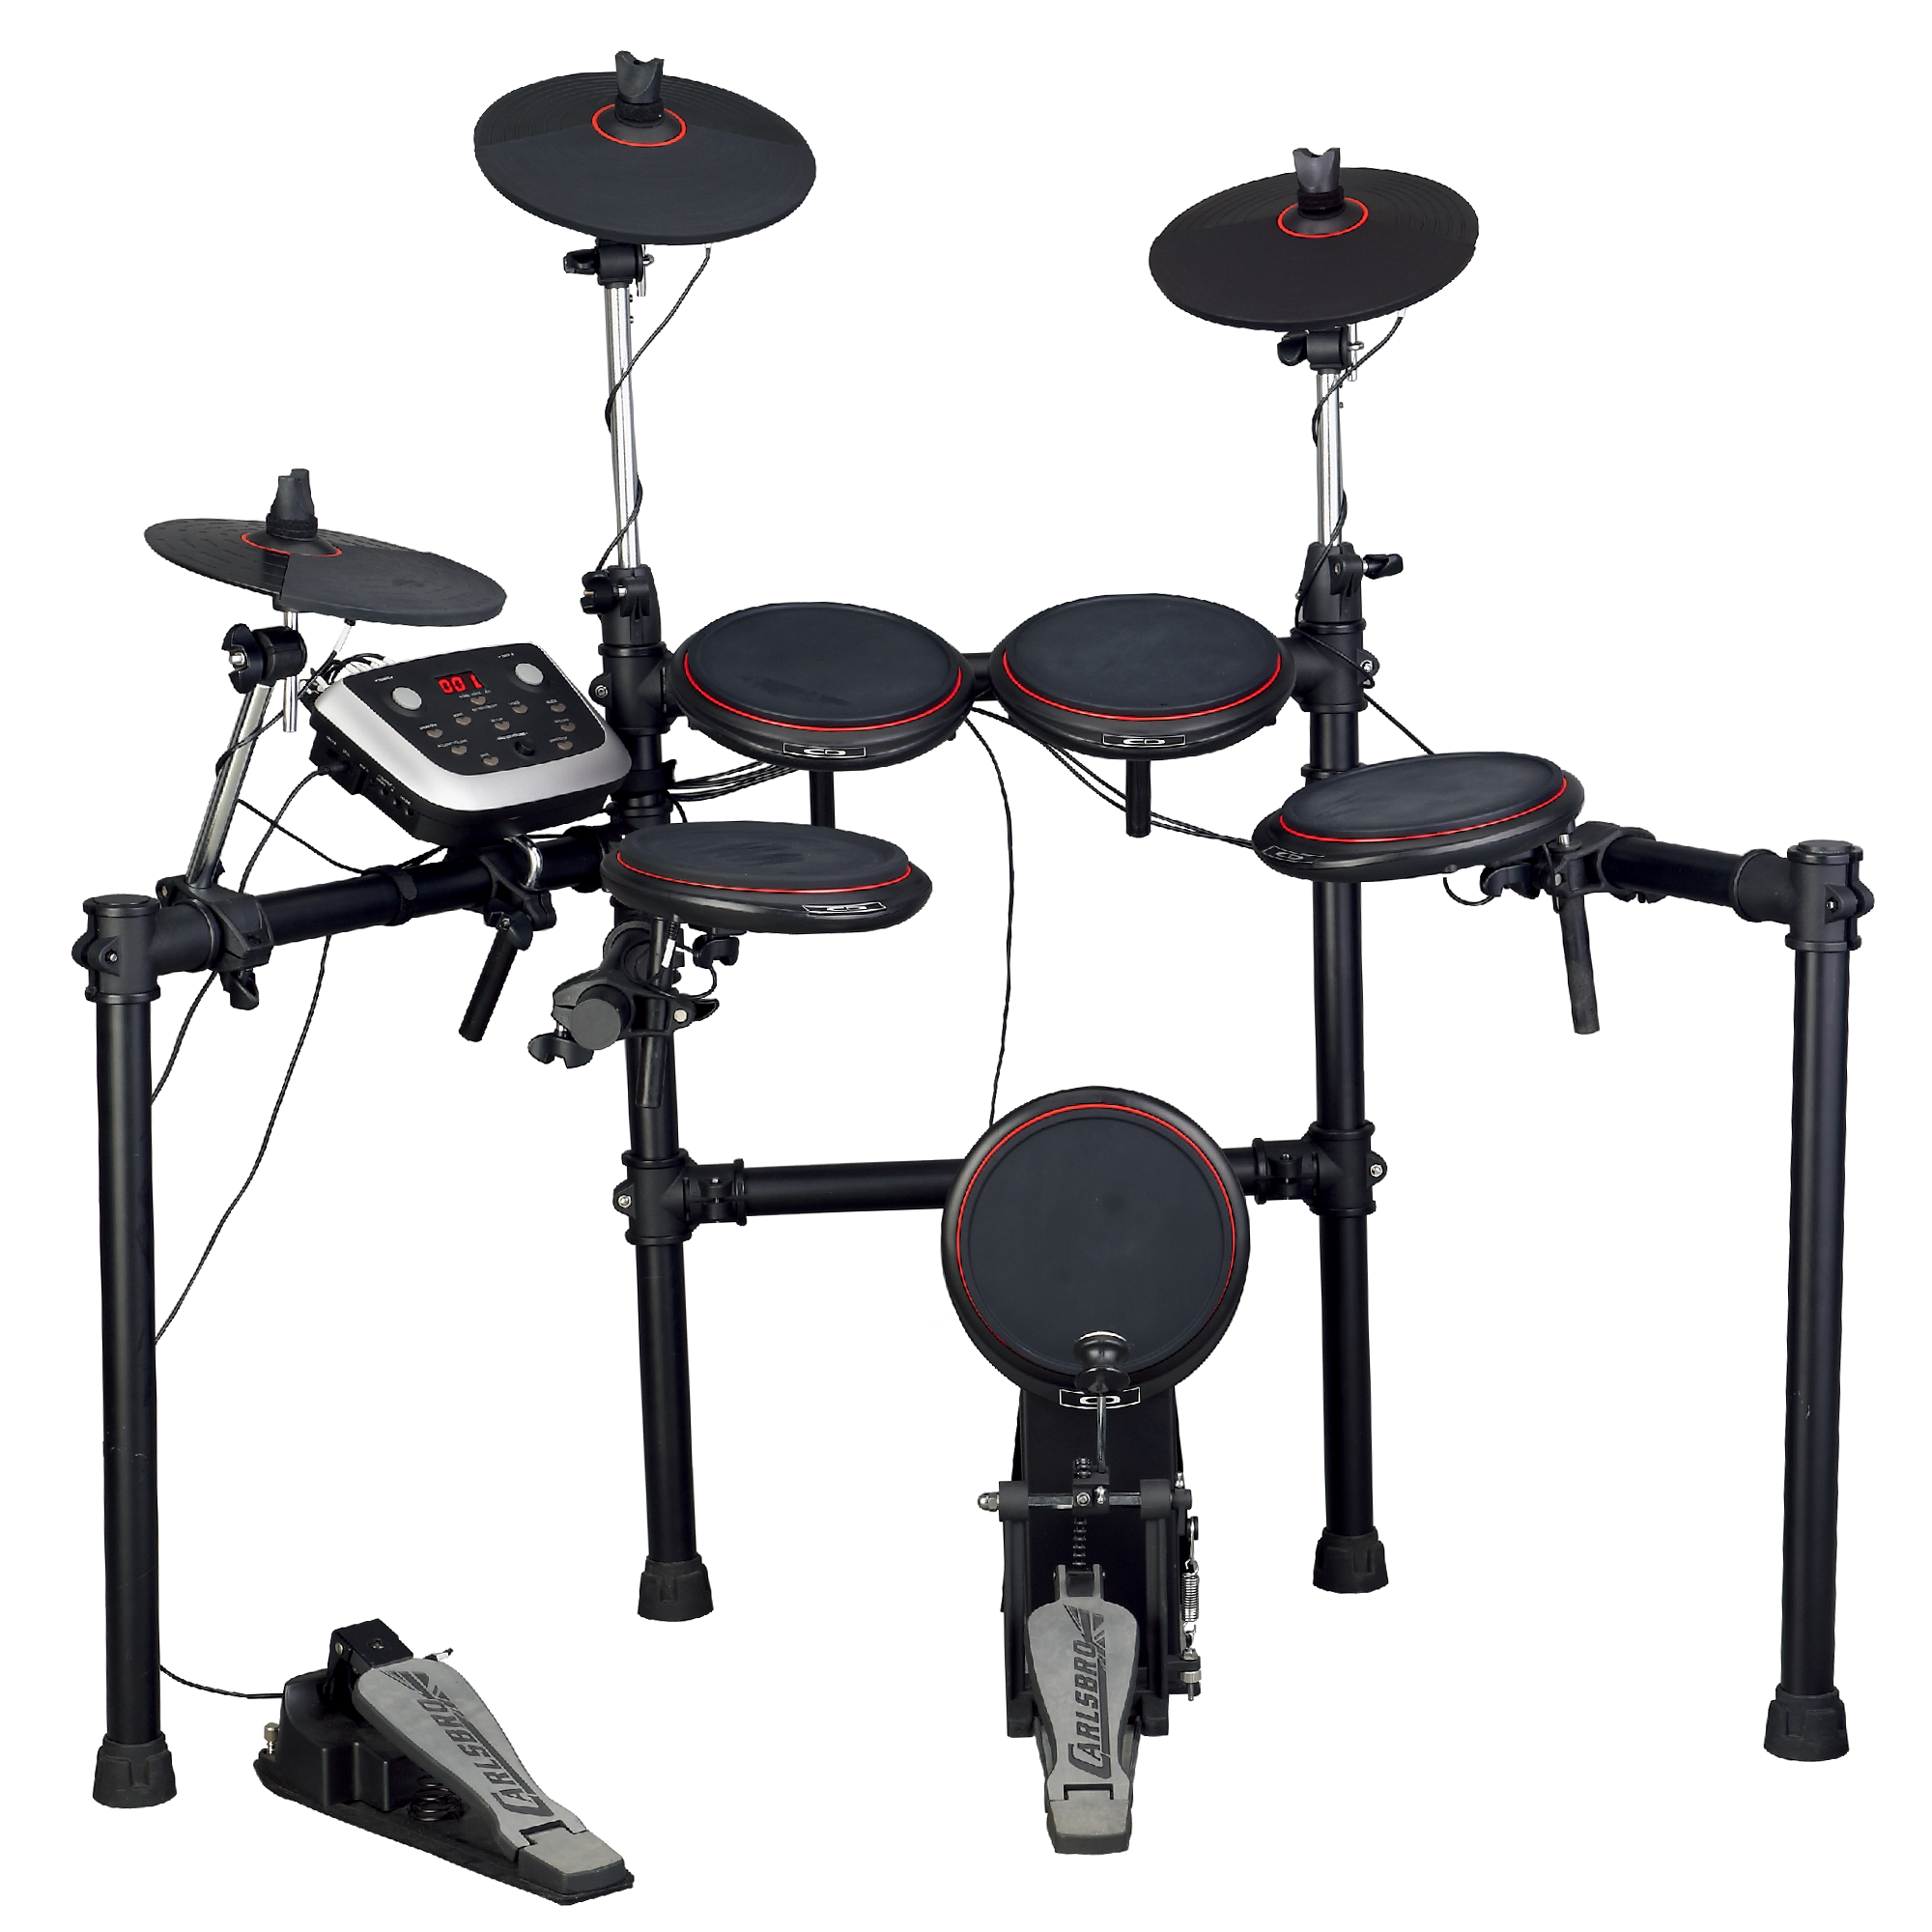 CARLSBRO CSD110 8 Piece Electronic Drum Kit